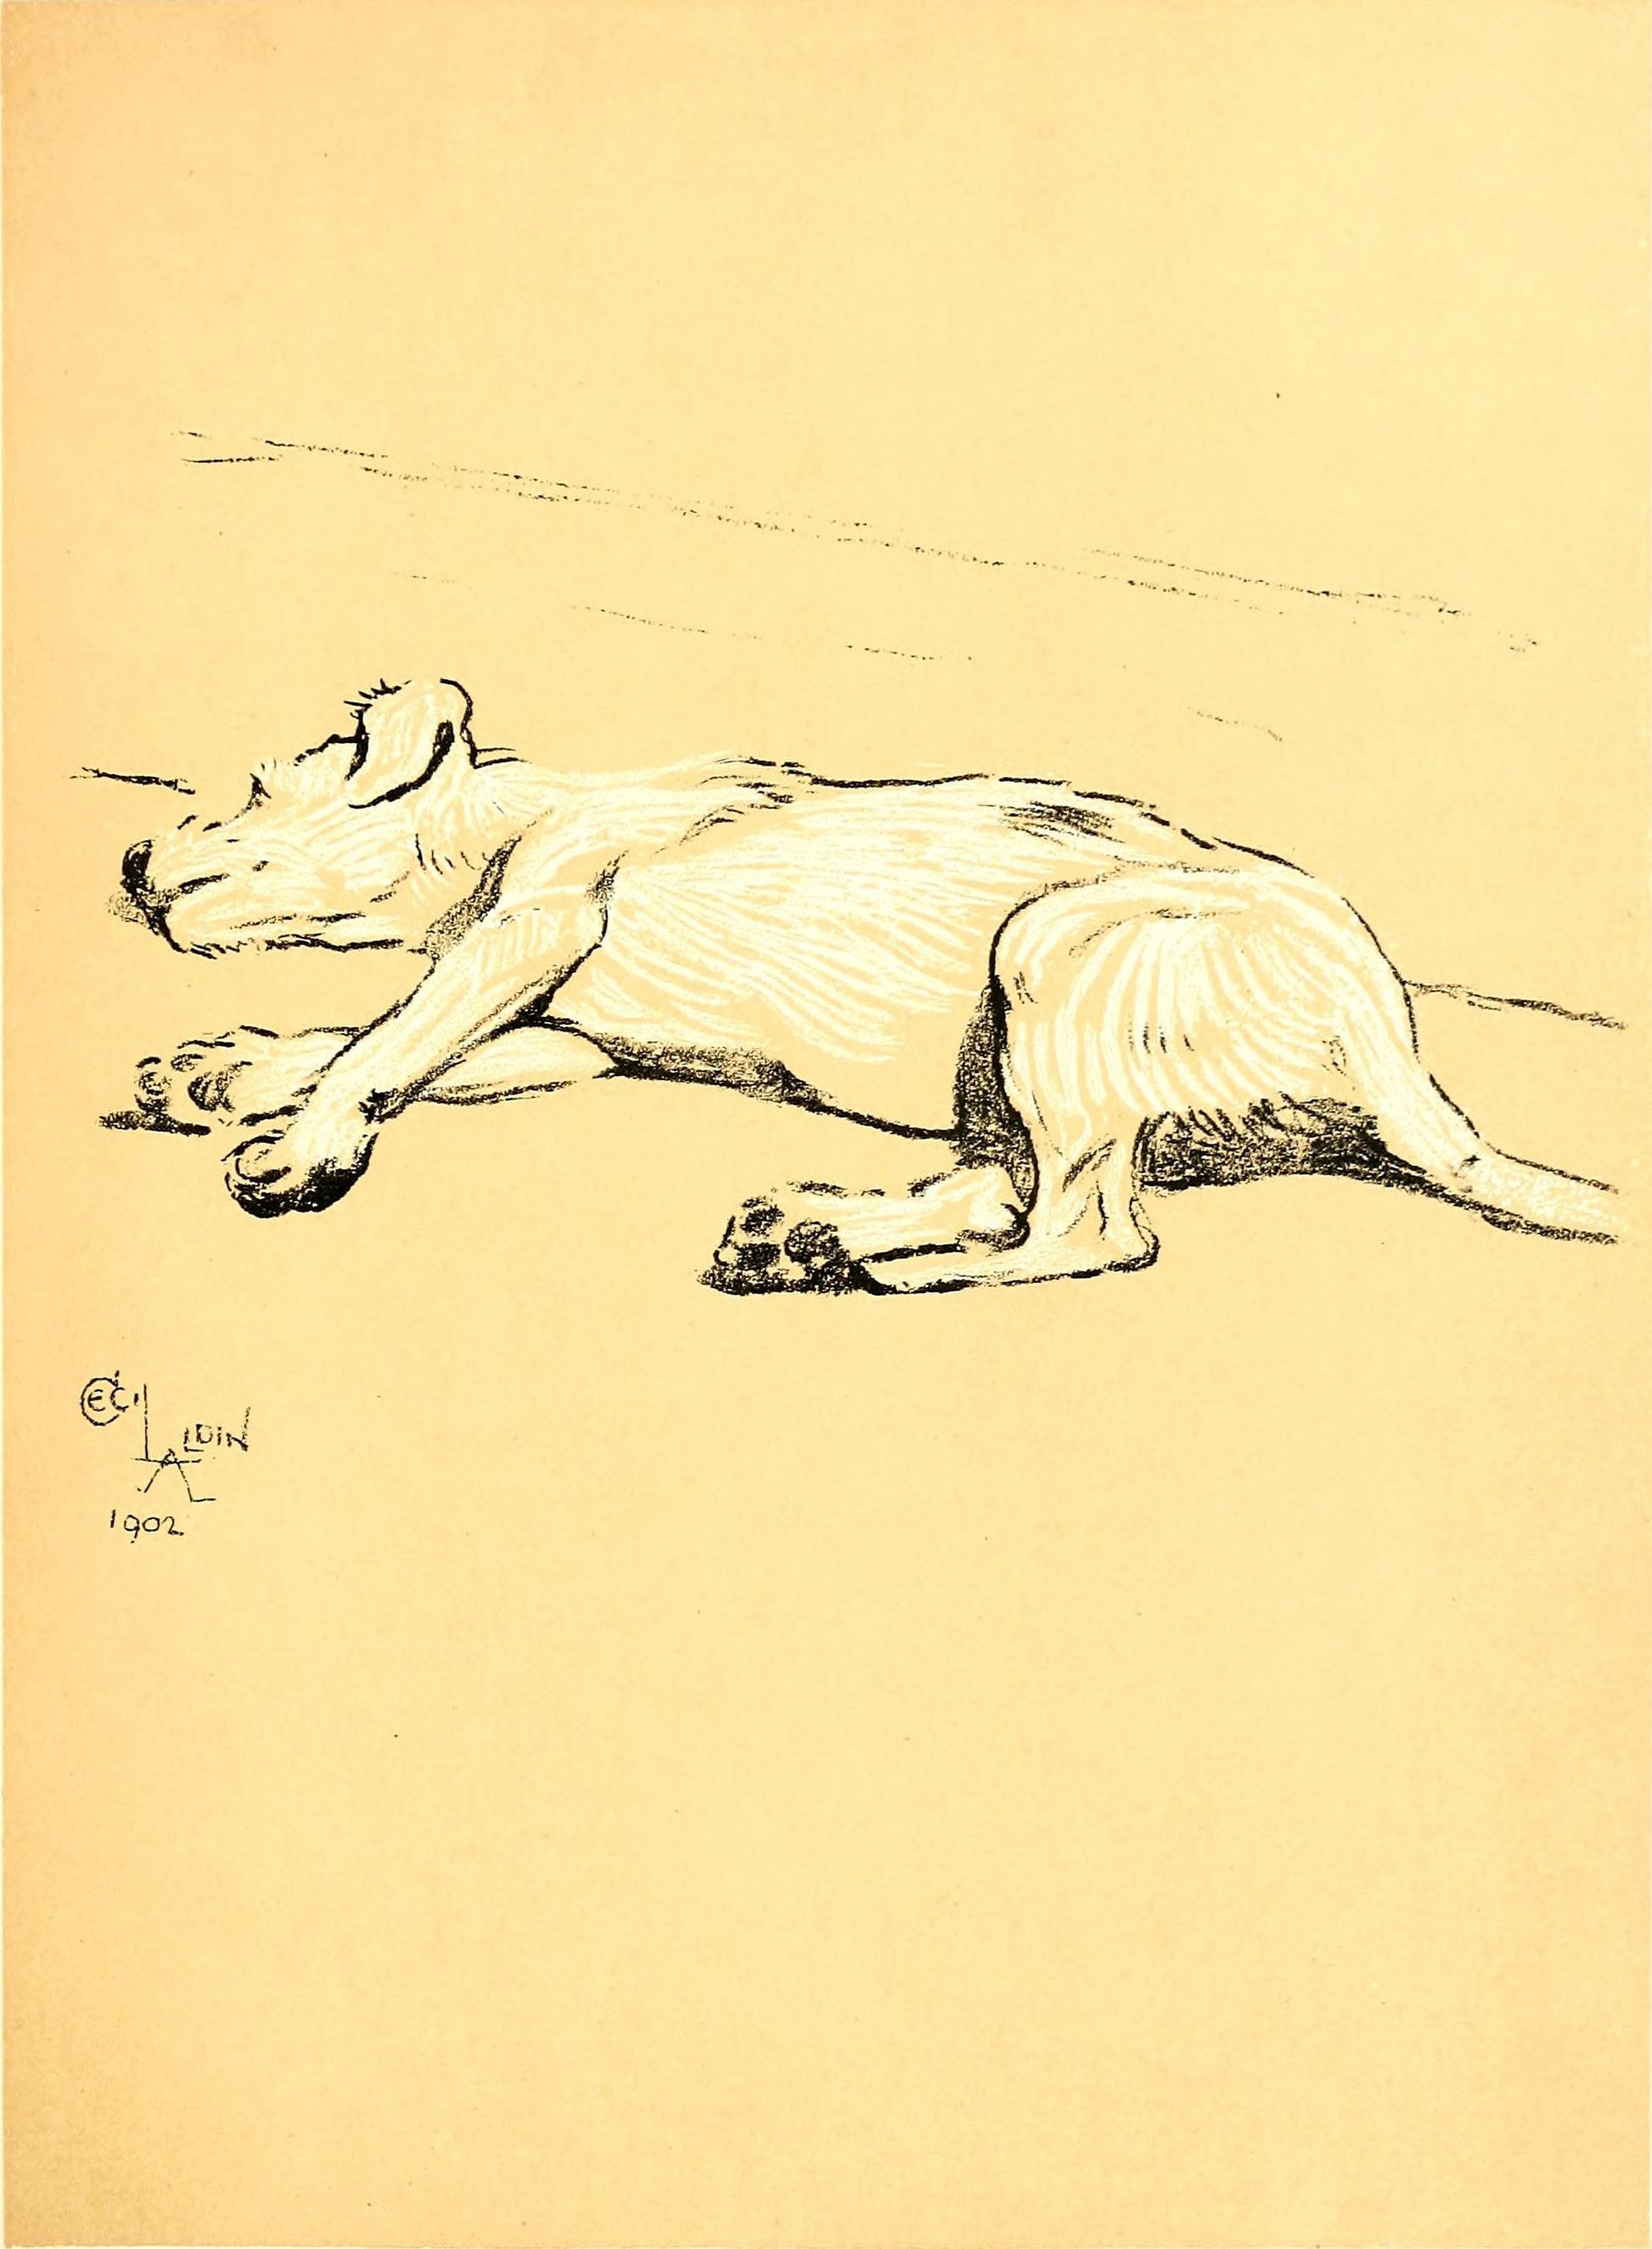 Sleeping dog (1900s) | Cecil Aldin dog prints Posters, Prints, & Visual Artwork The Trumpet Shop   